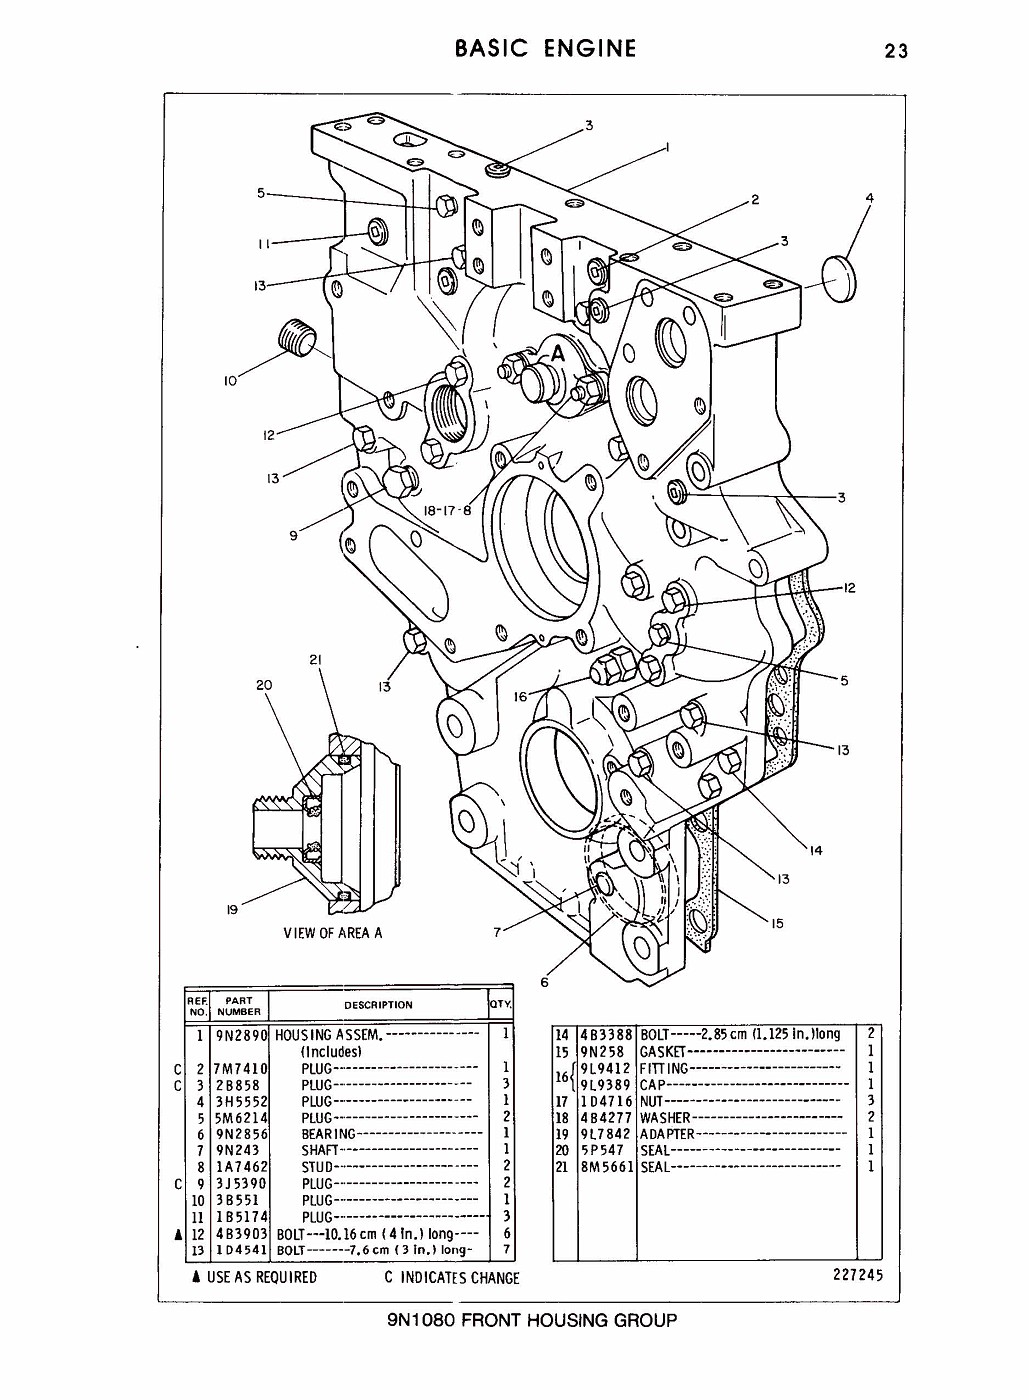 cat generator manual 3208